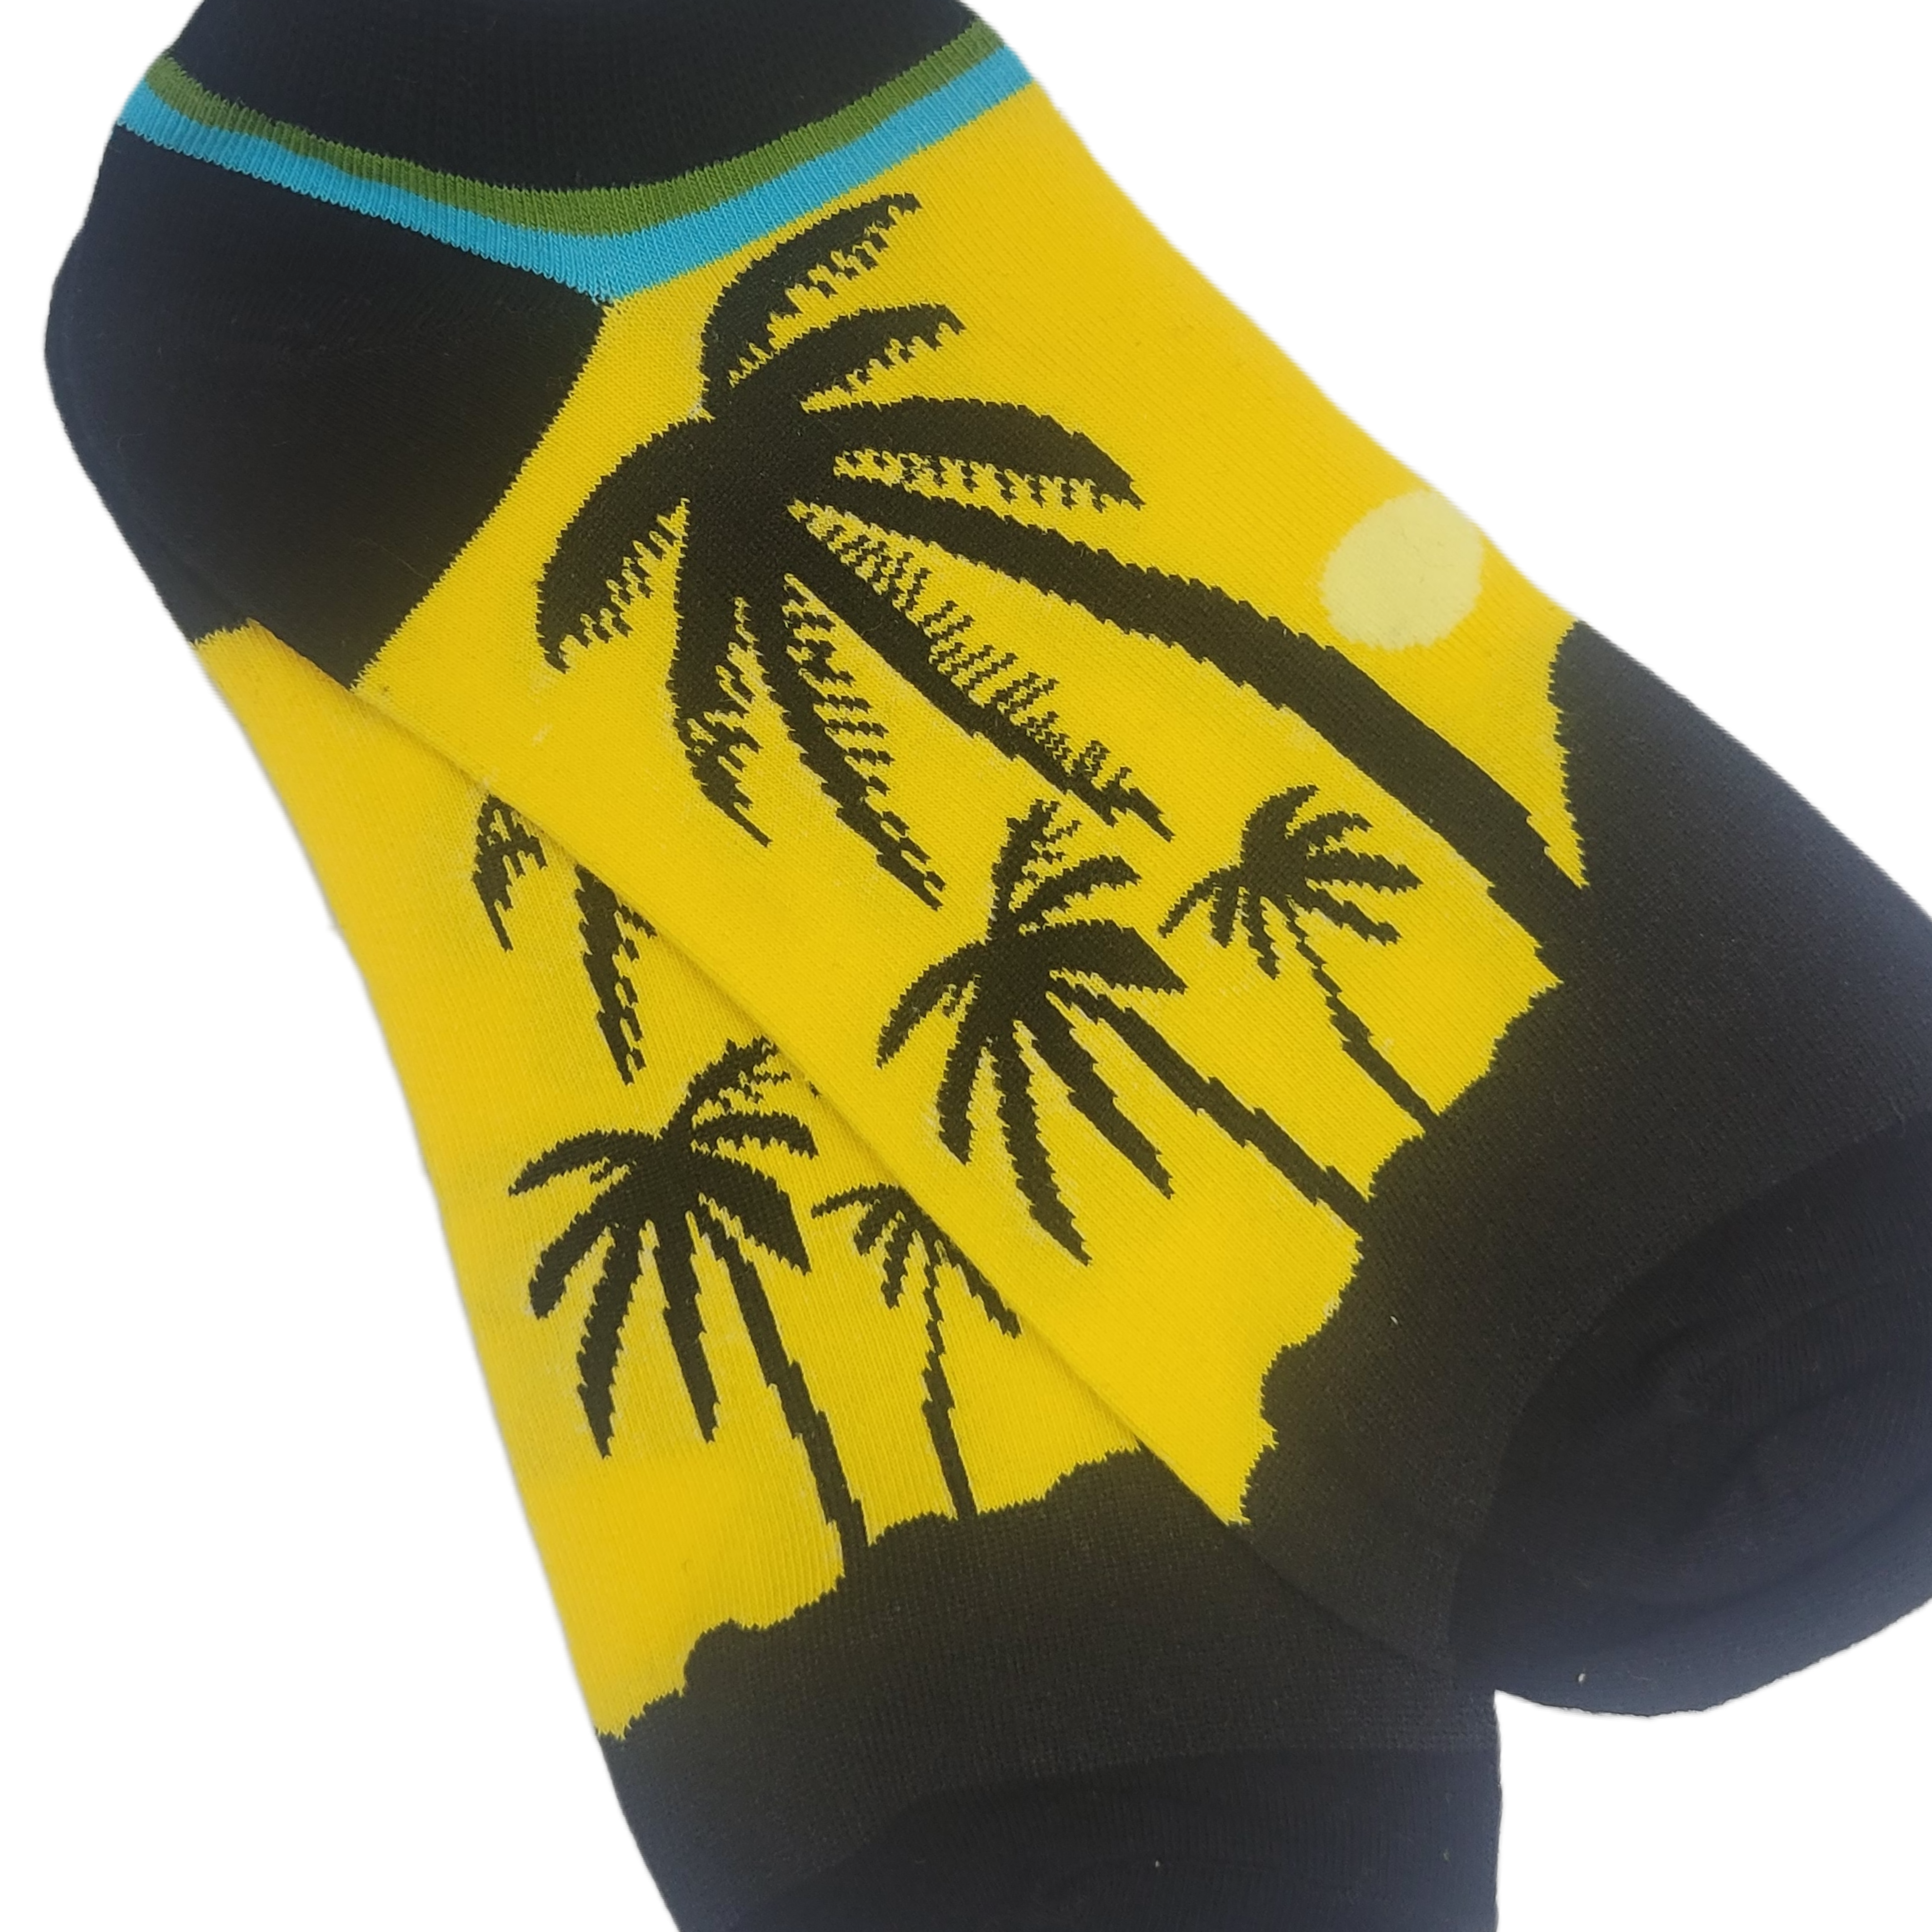 Yellow Island Palm Tree Ankle Socks (Adult Large)